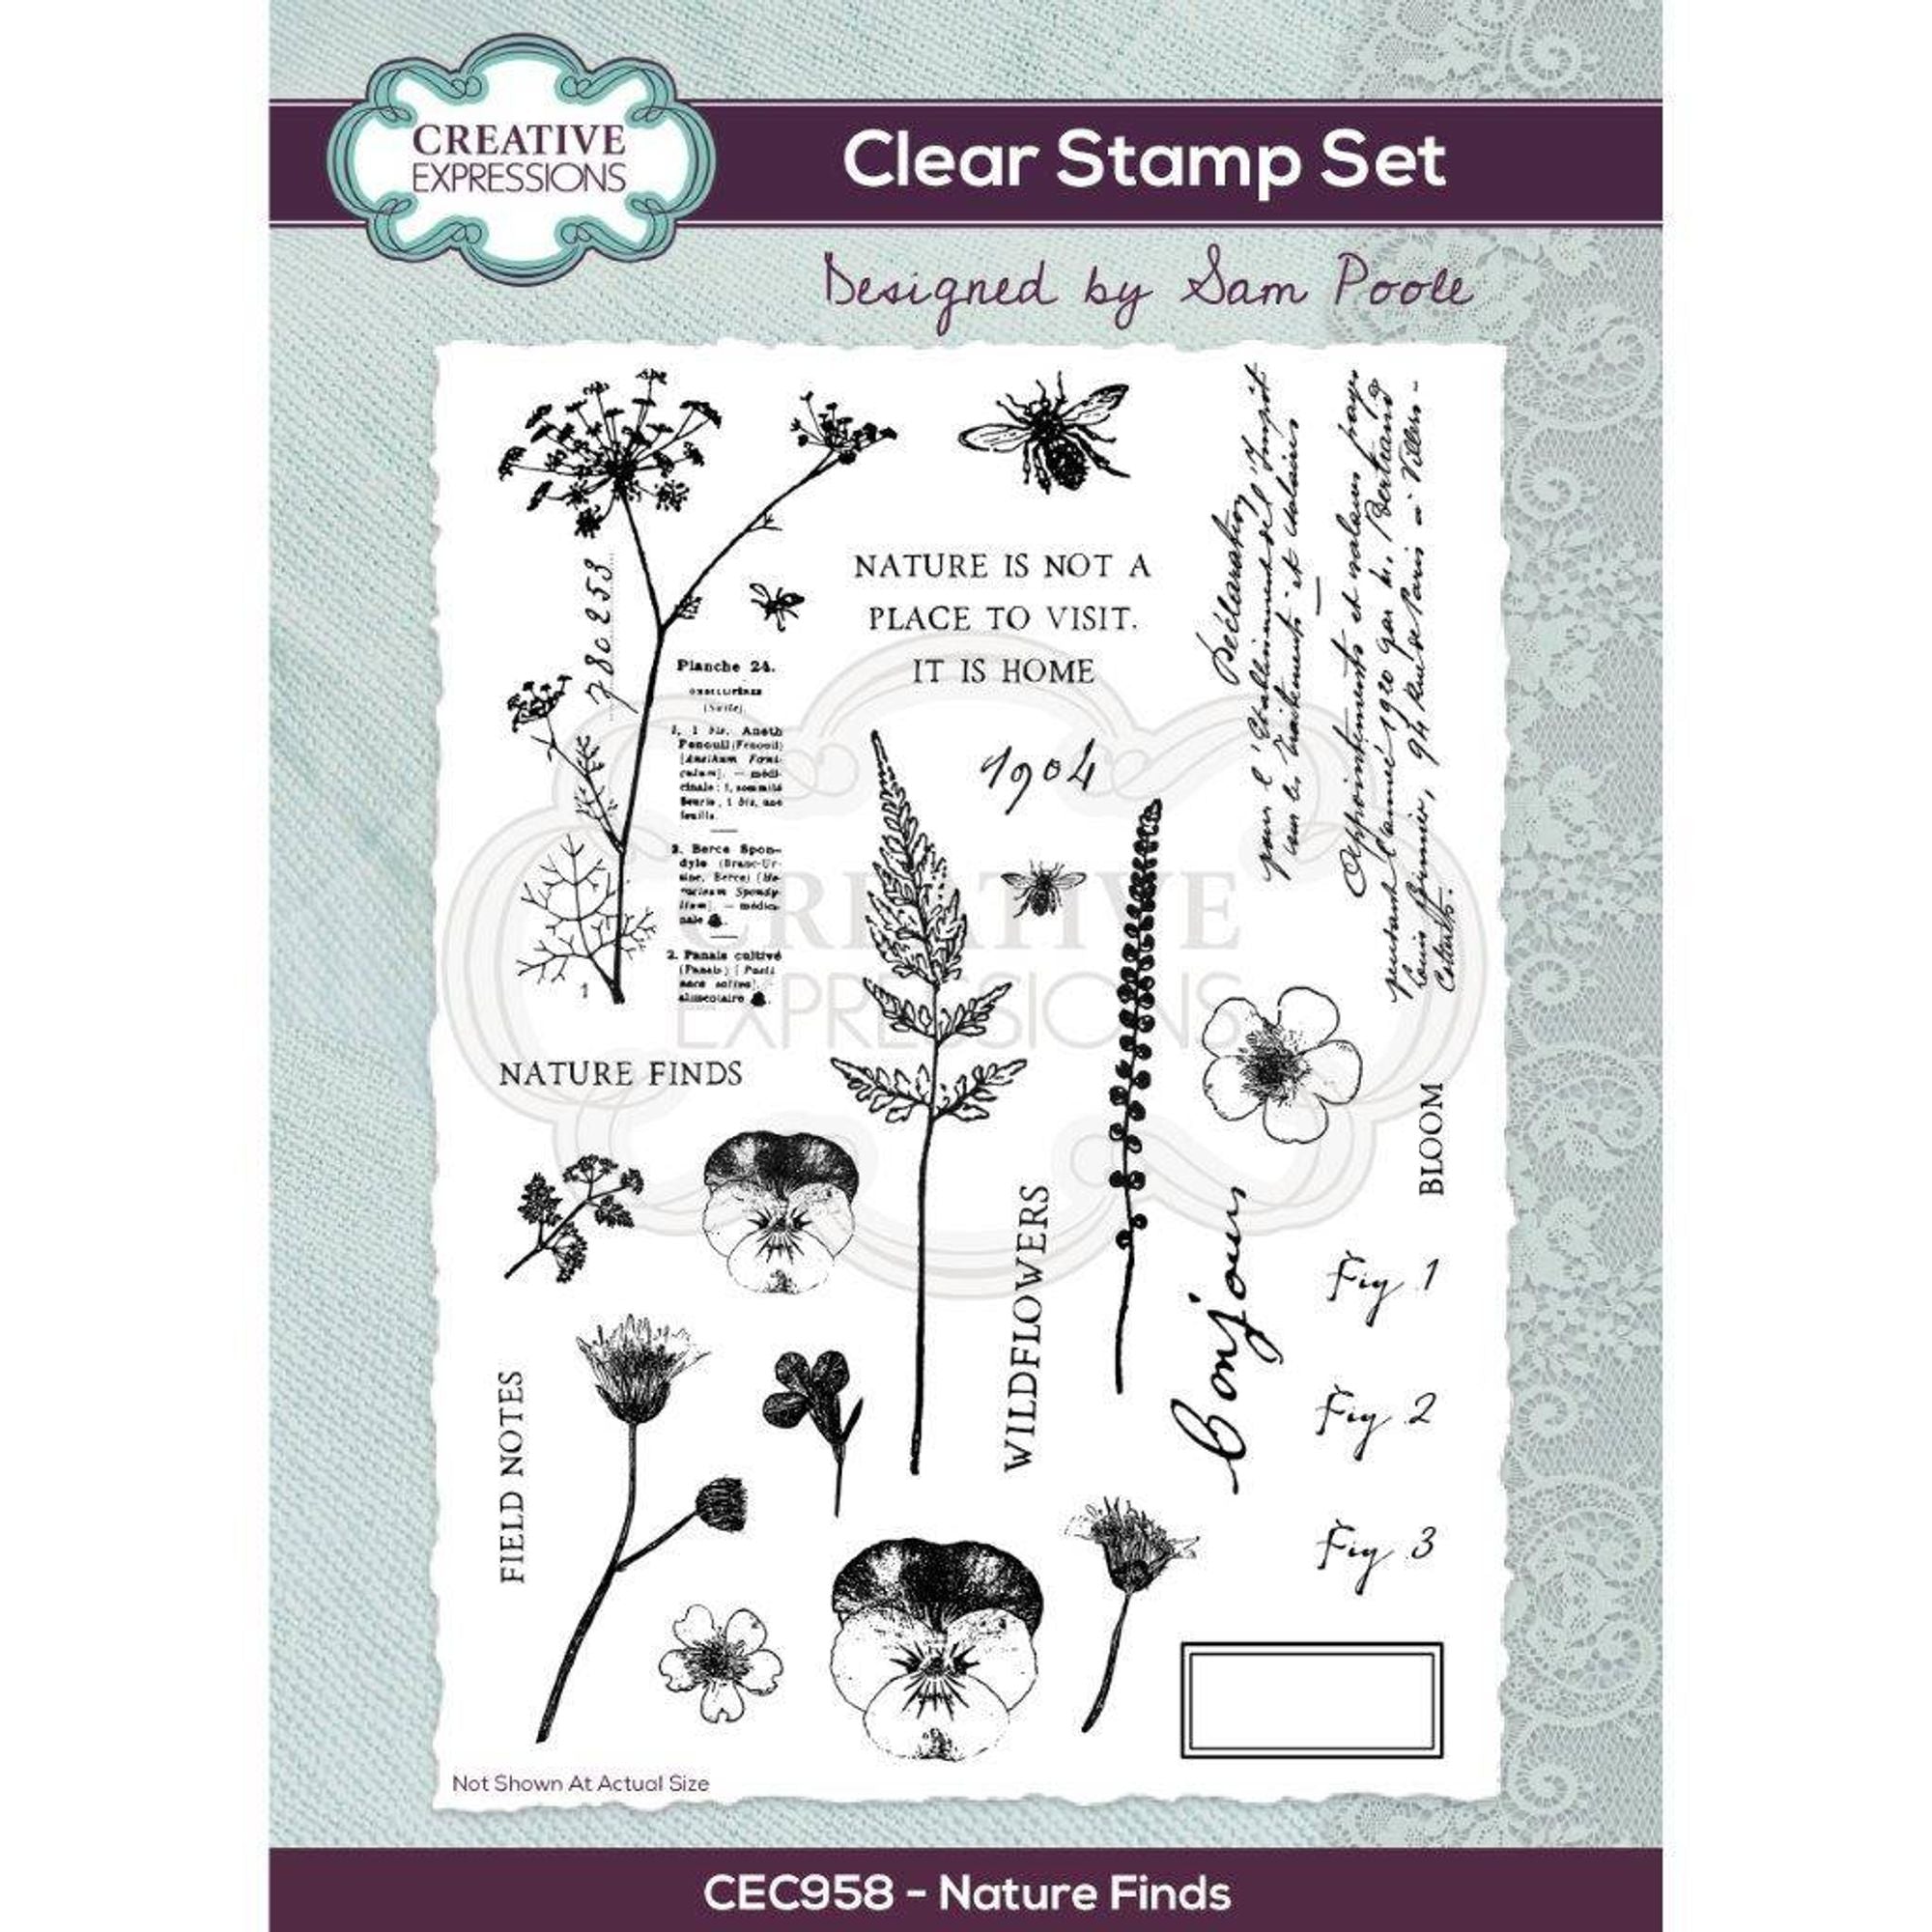 Sam Poole Nature Finds A5 Clear Stamp Set